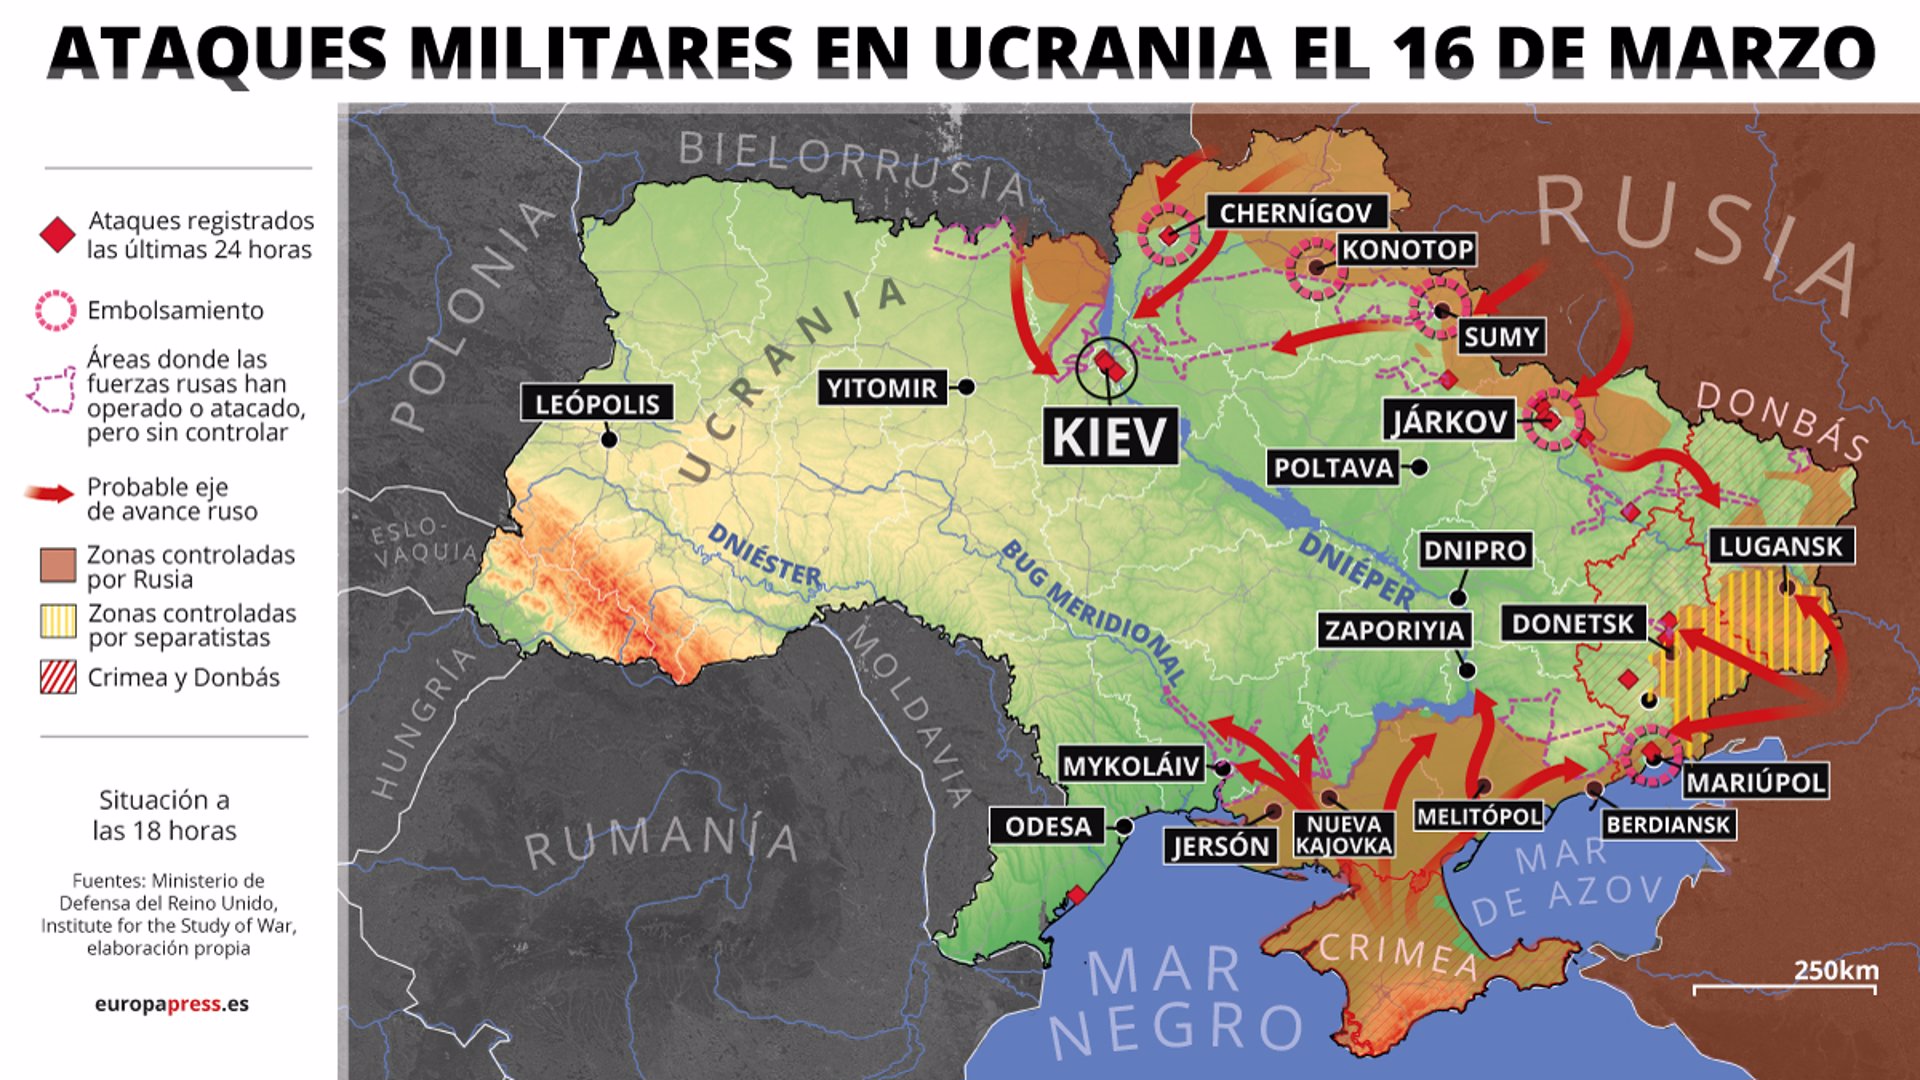 Ucrania. Mapa de los ataques militares el 16 de marzo